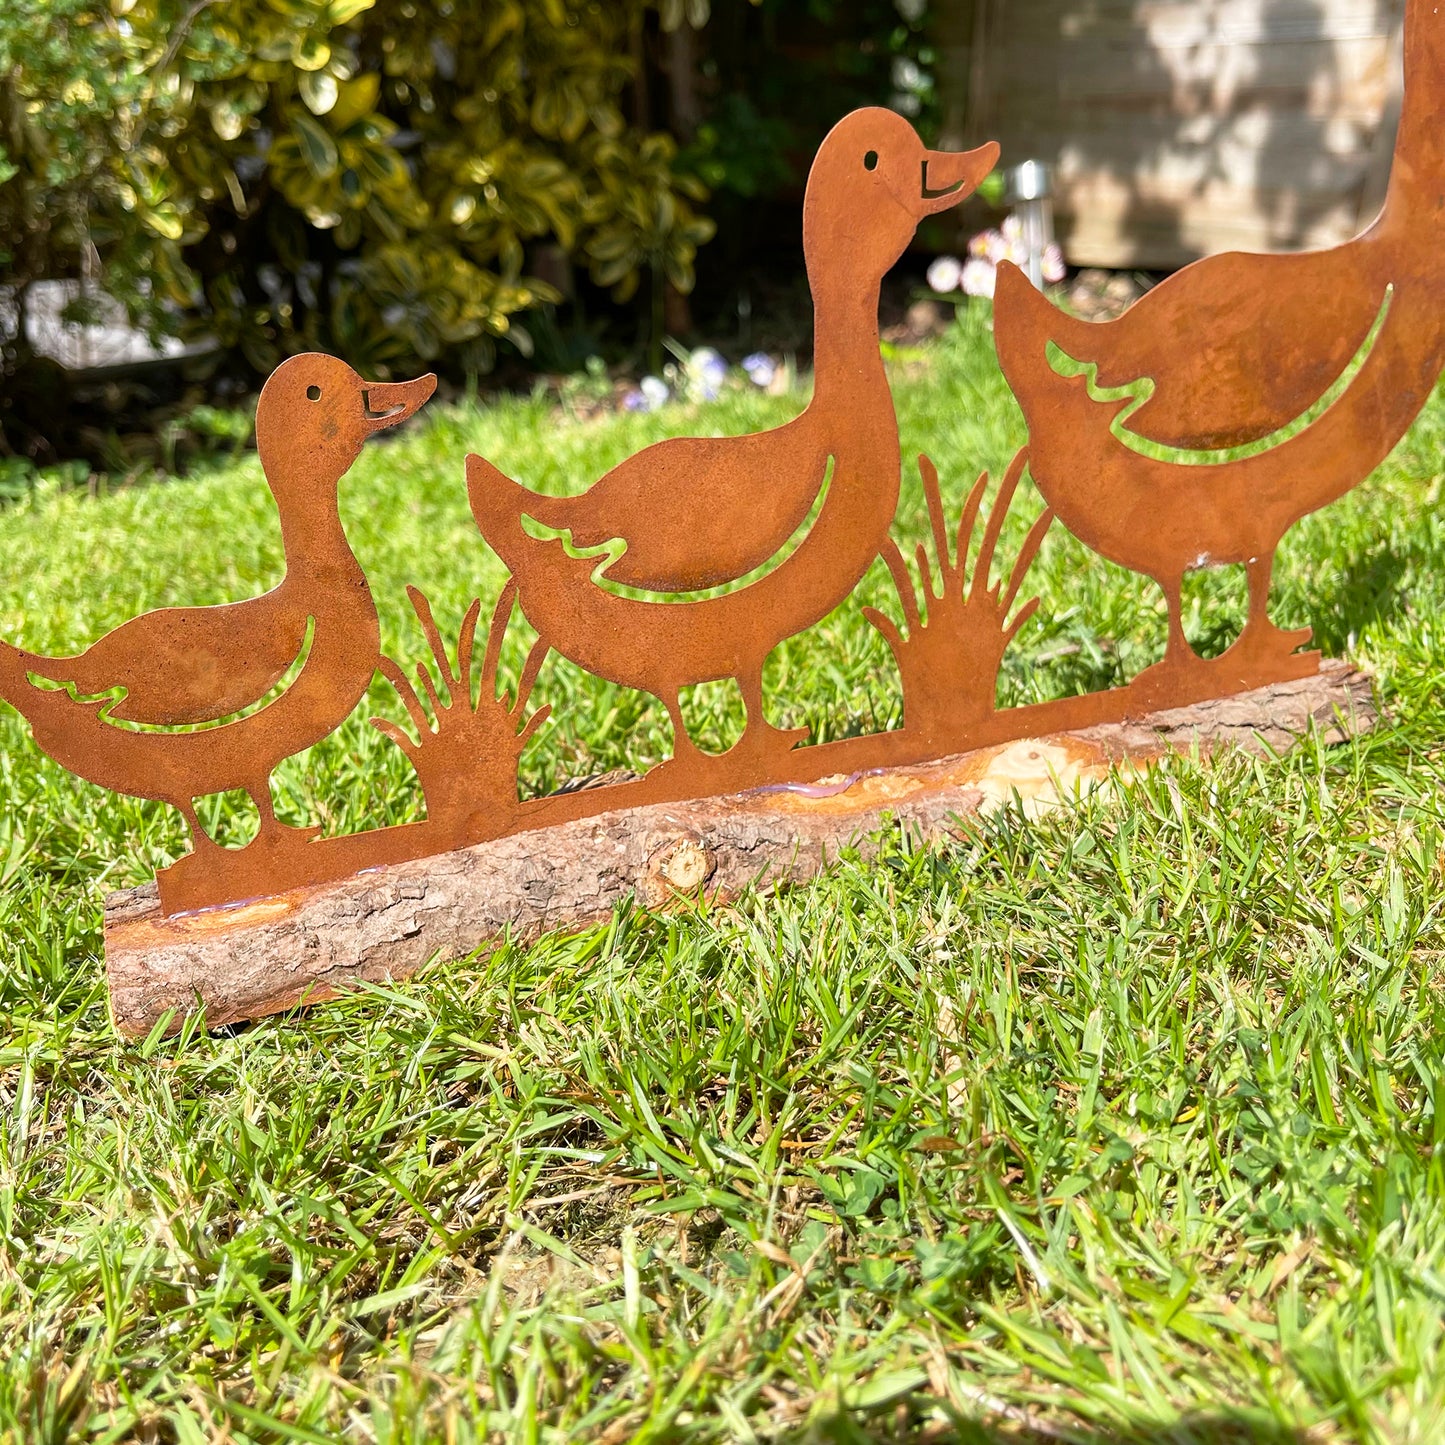 Rusty Ducks Garden Ornament On Wood Stand